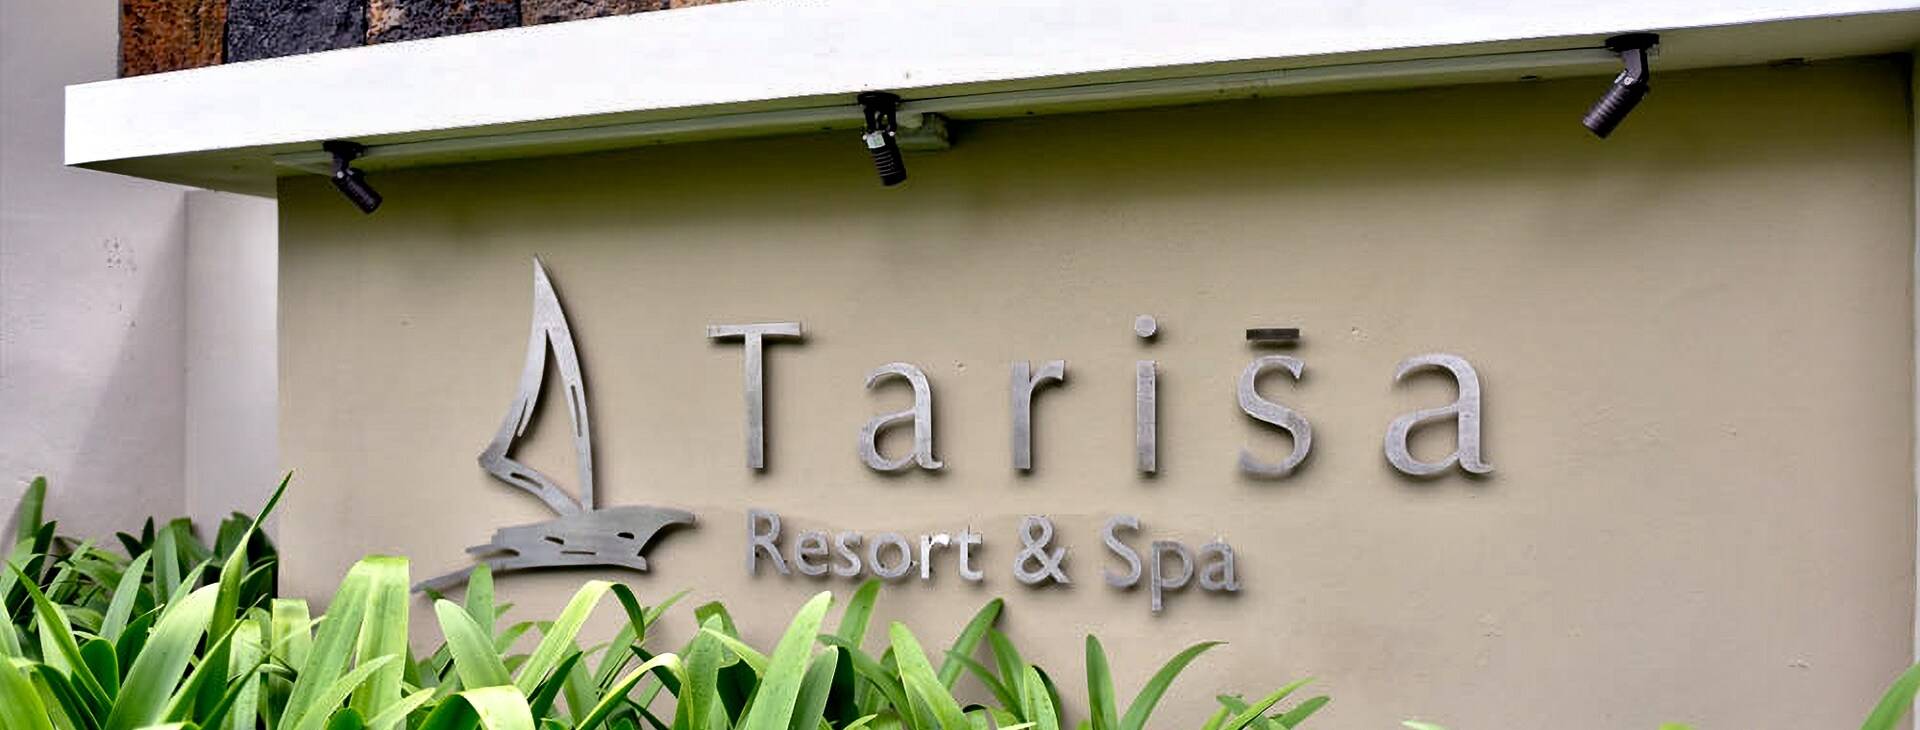 Tarisa Resort & Spa Obrázok29